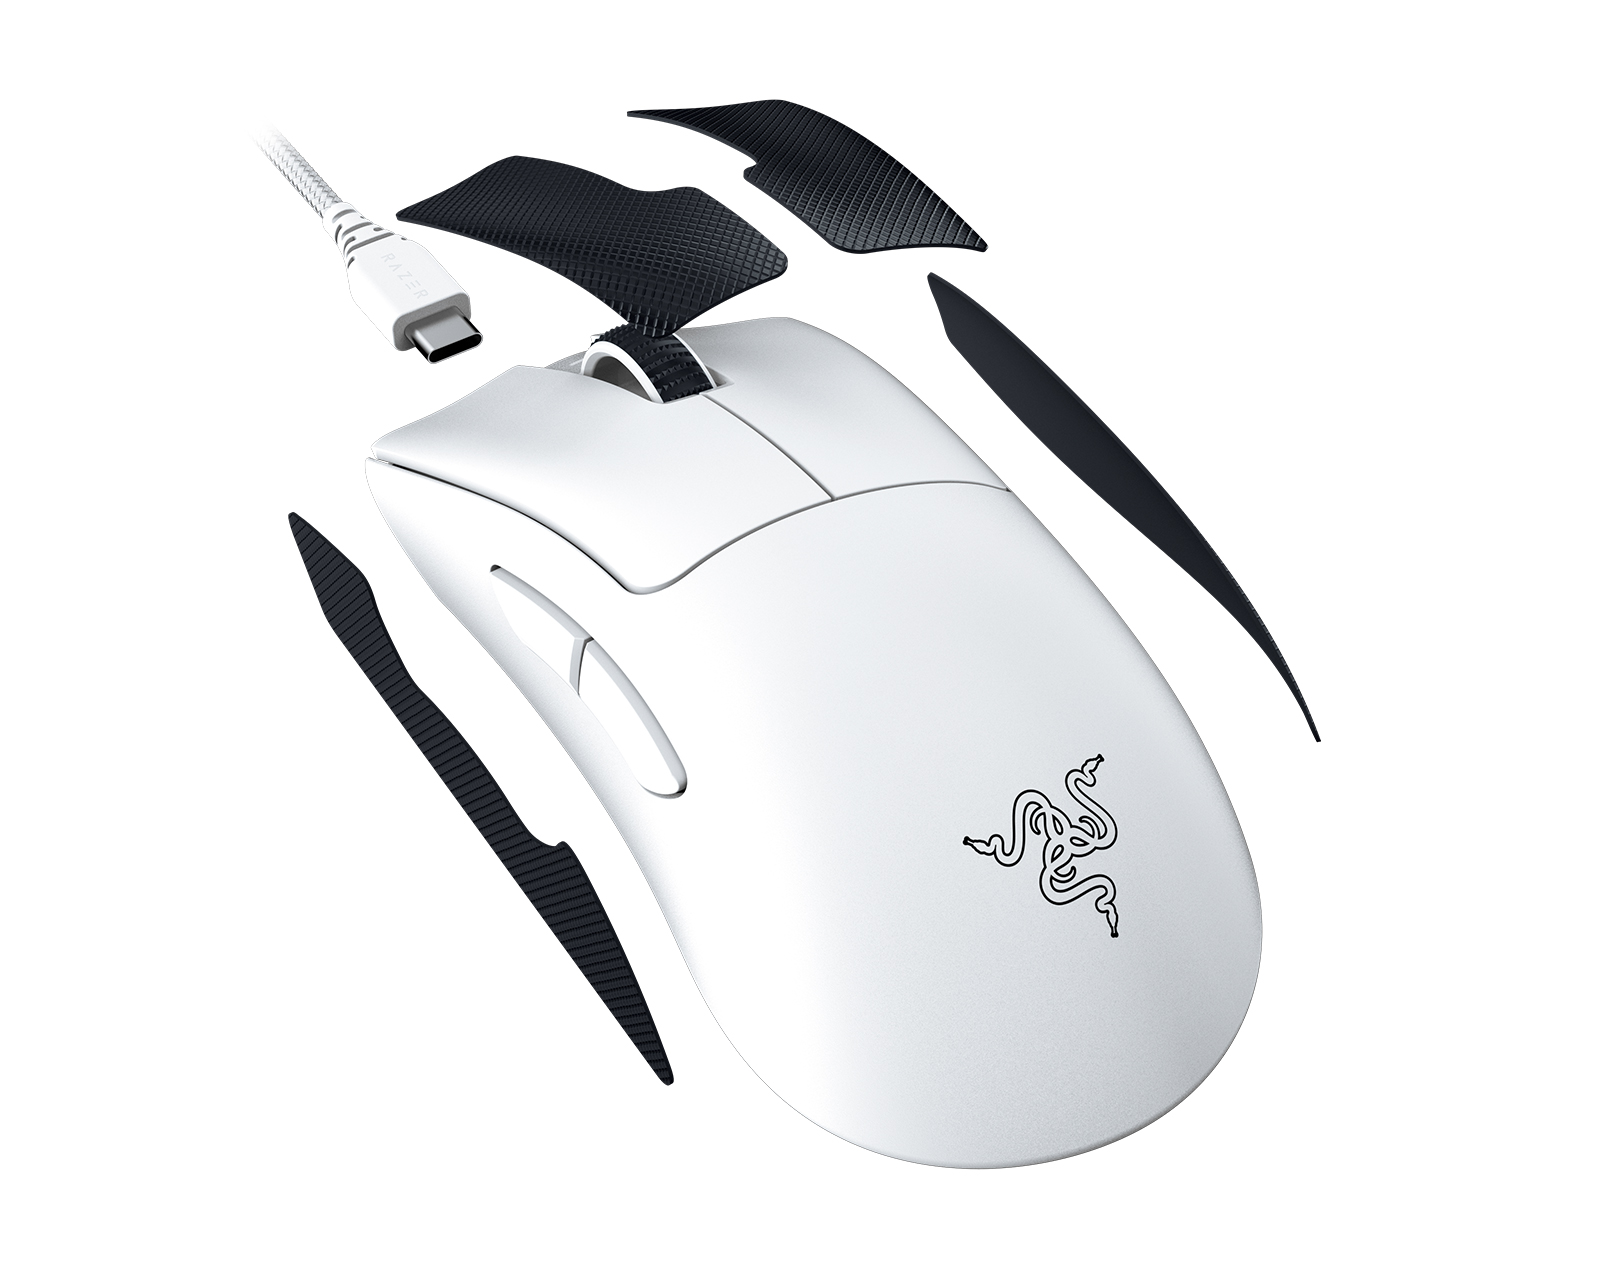 Razer DeathAdder V3 Pro Lightweight Wireless Gaming Mouse - White